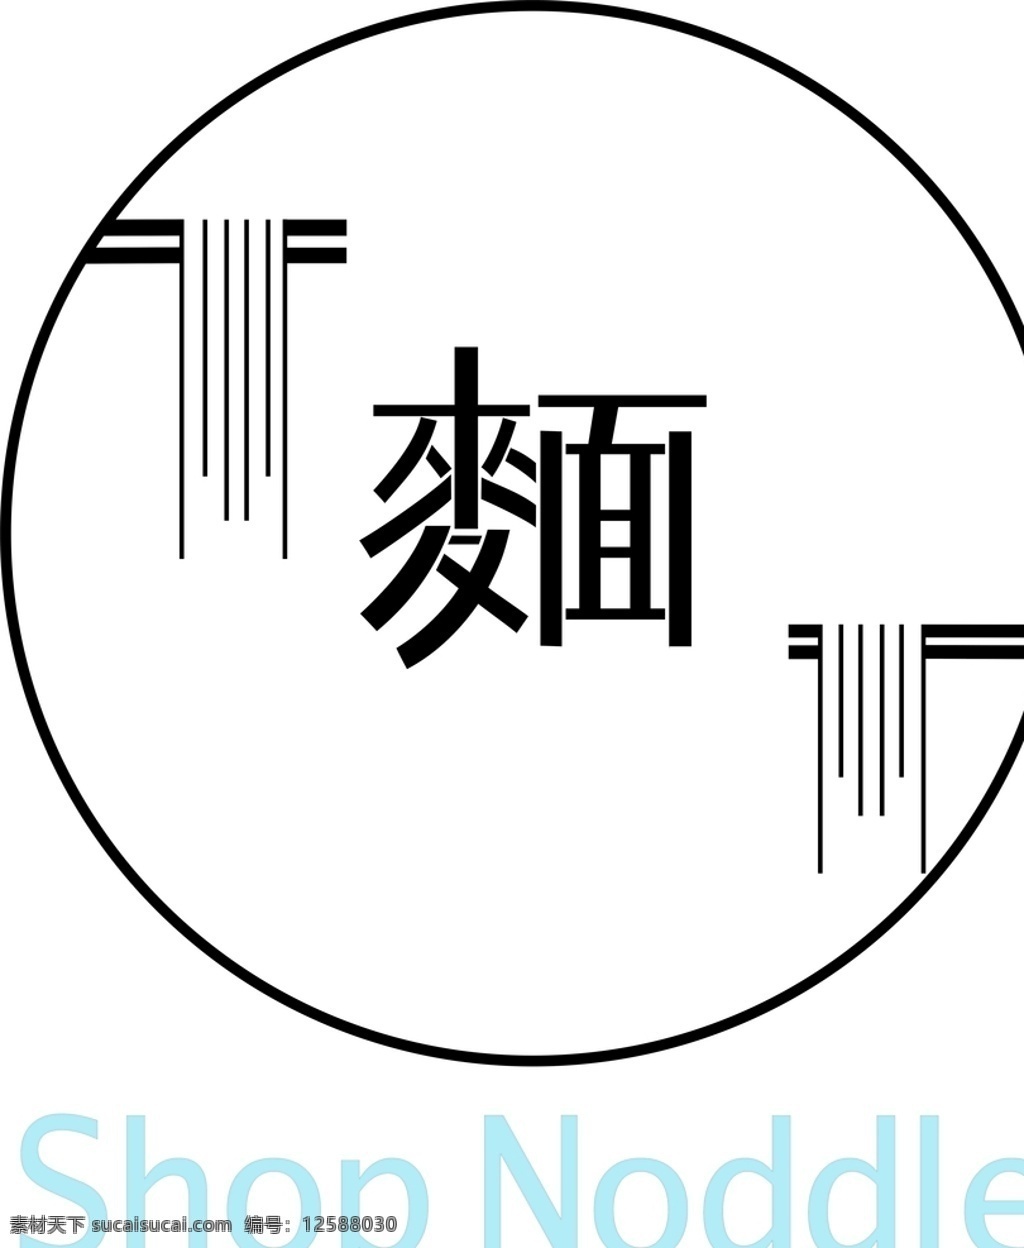 面食logo 面logo 面店logo 面字logo 图标logo logo设计